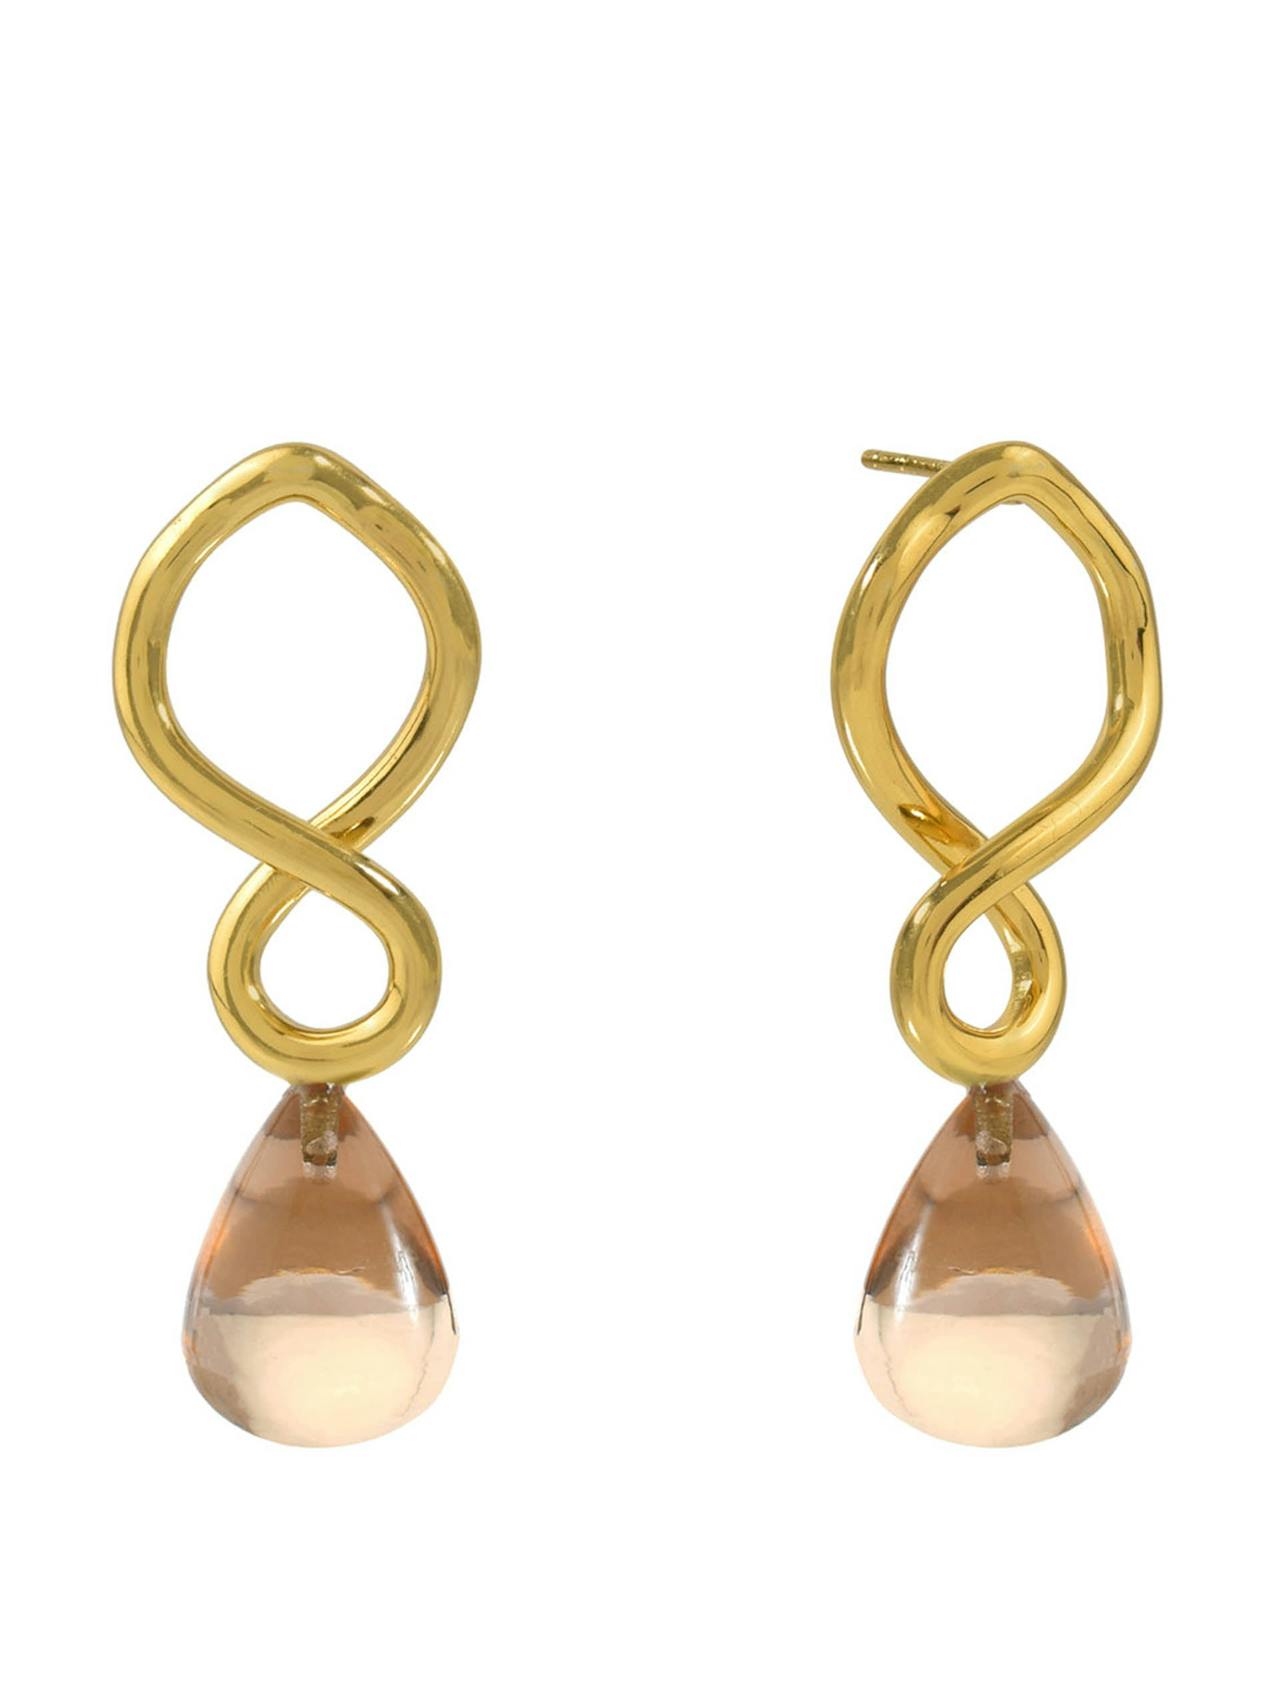 Champagne Corsica earrings